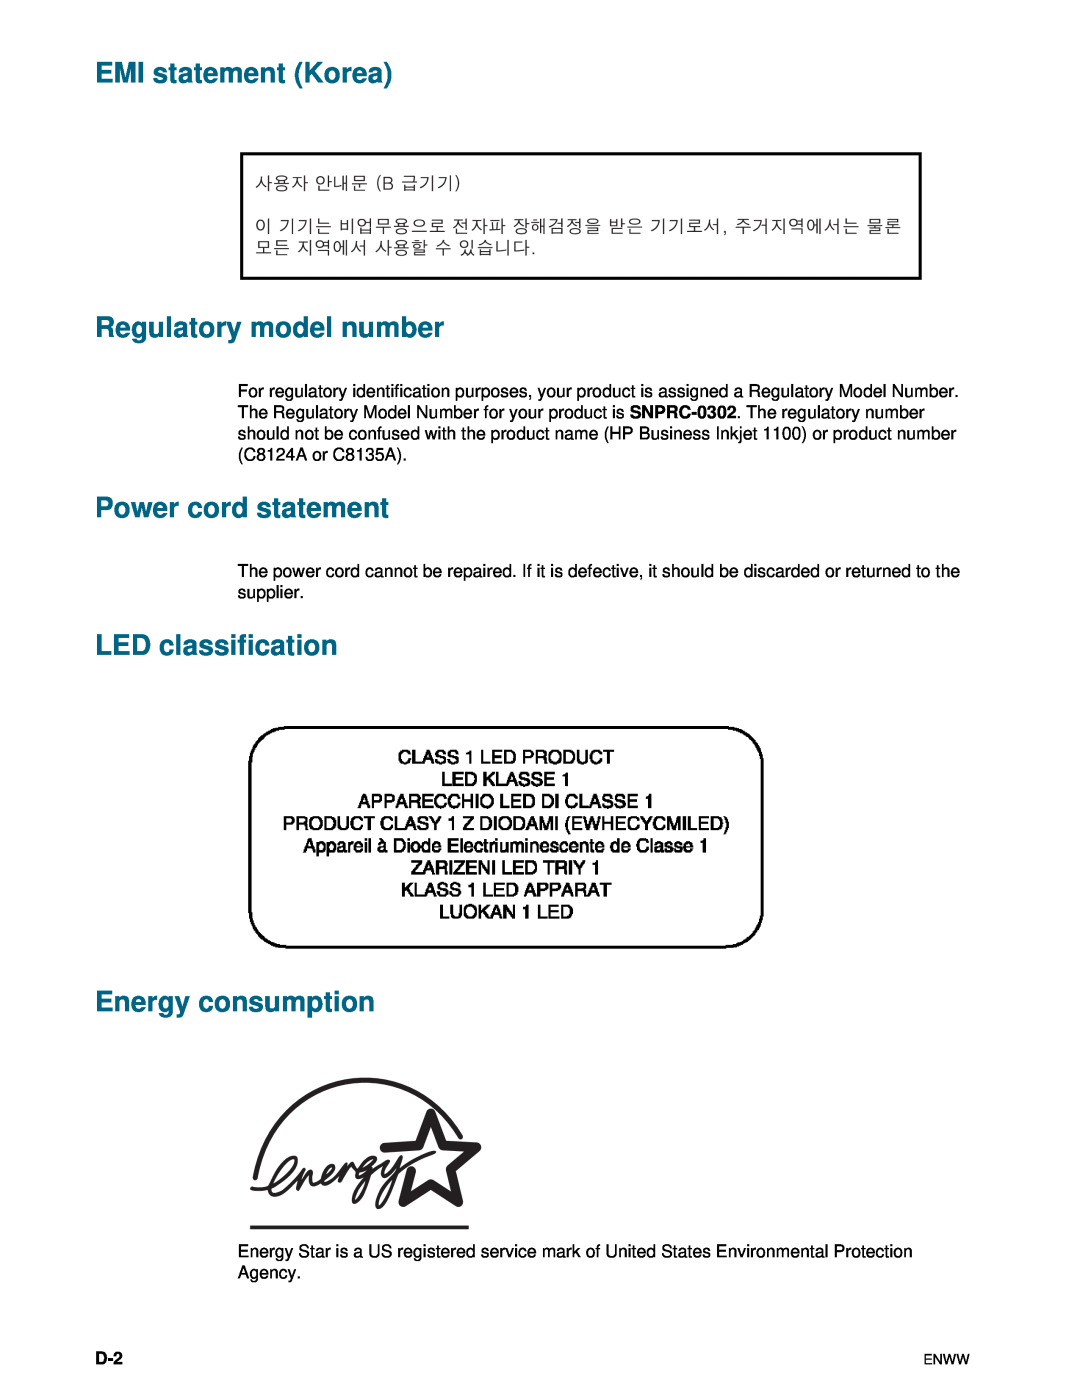 HP 1100dtn EMI statement Korea Regulatory model number, Power cord statement, LED classification Energy consumption 